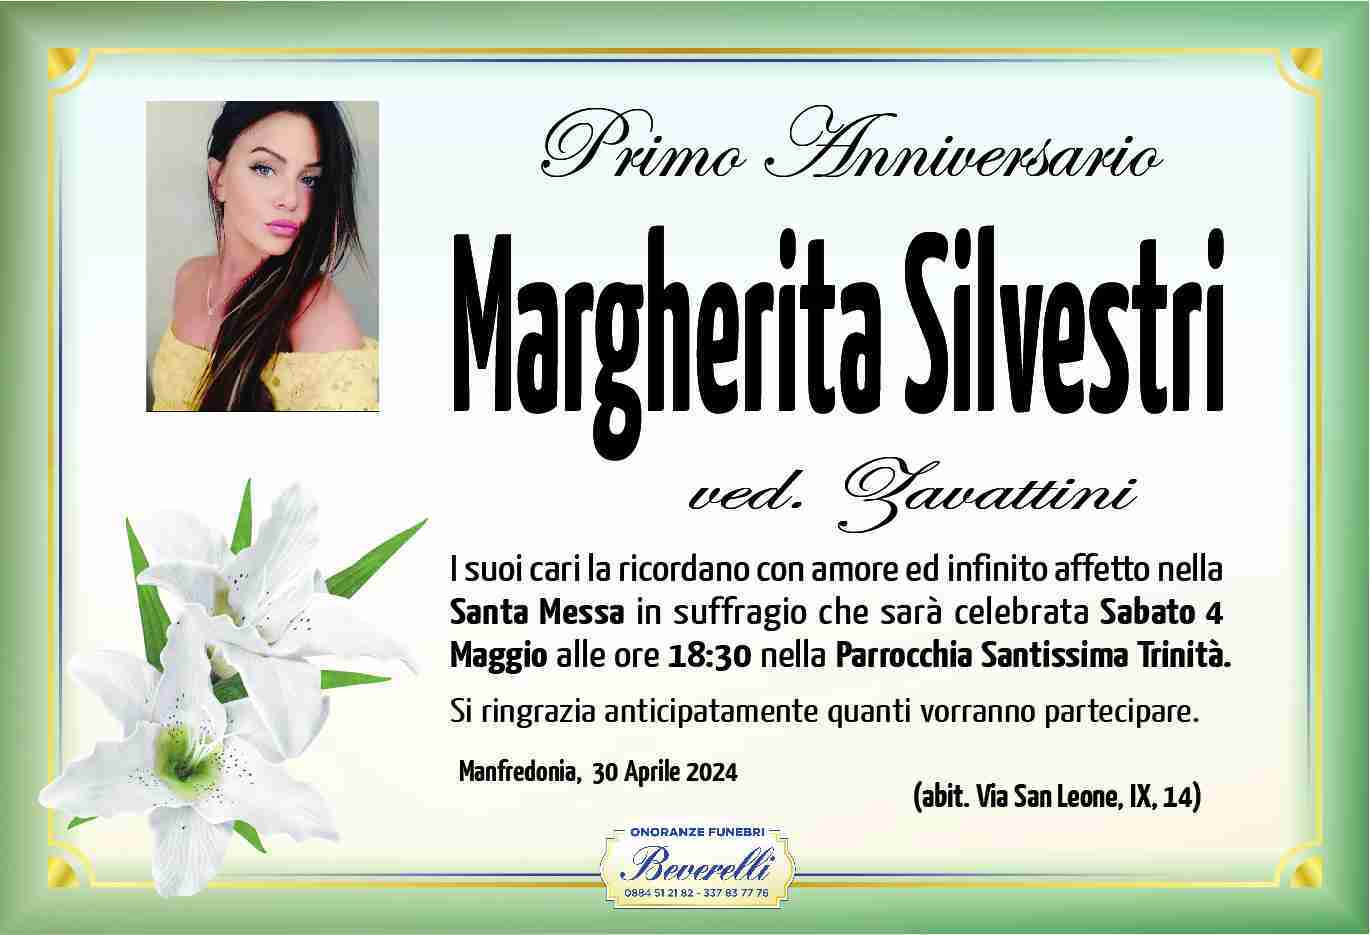 Margherita Silvestri